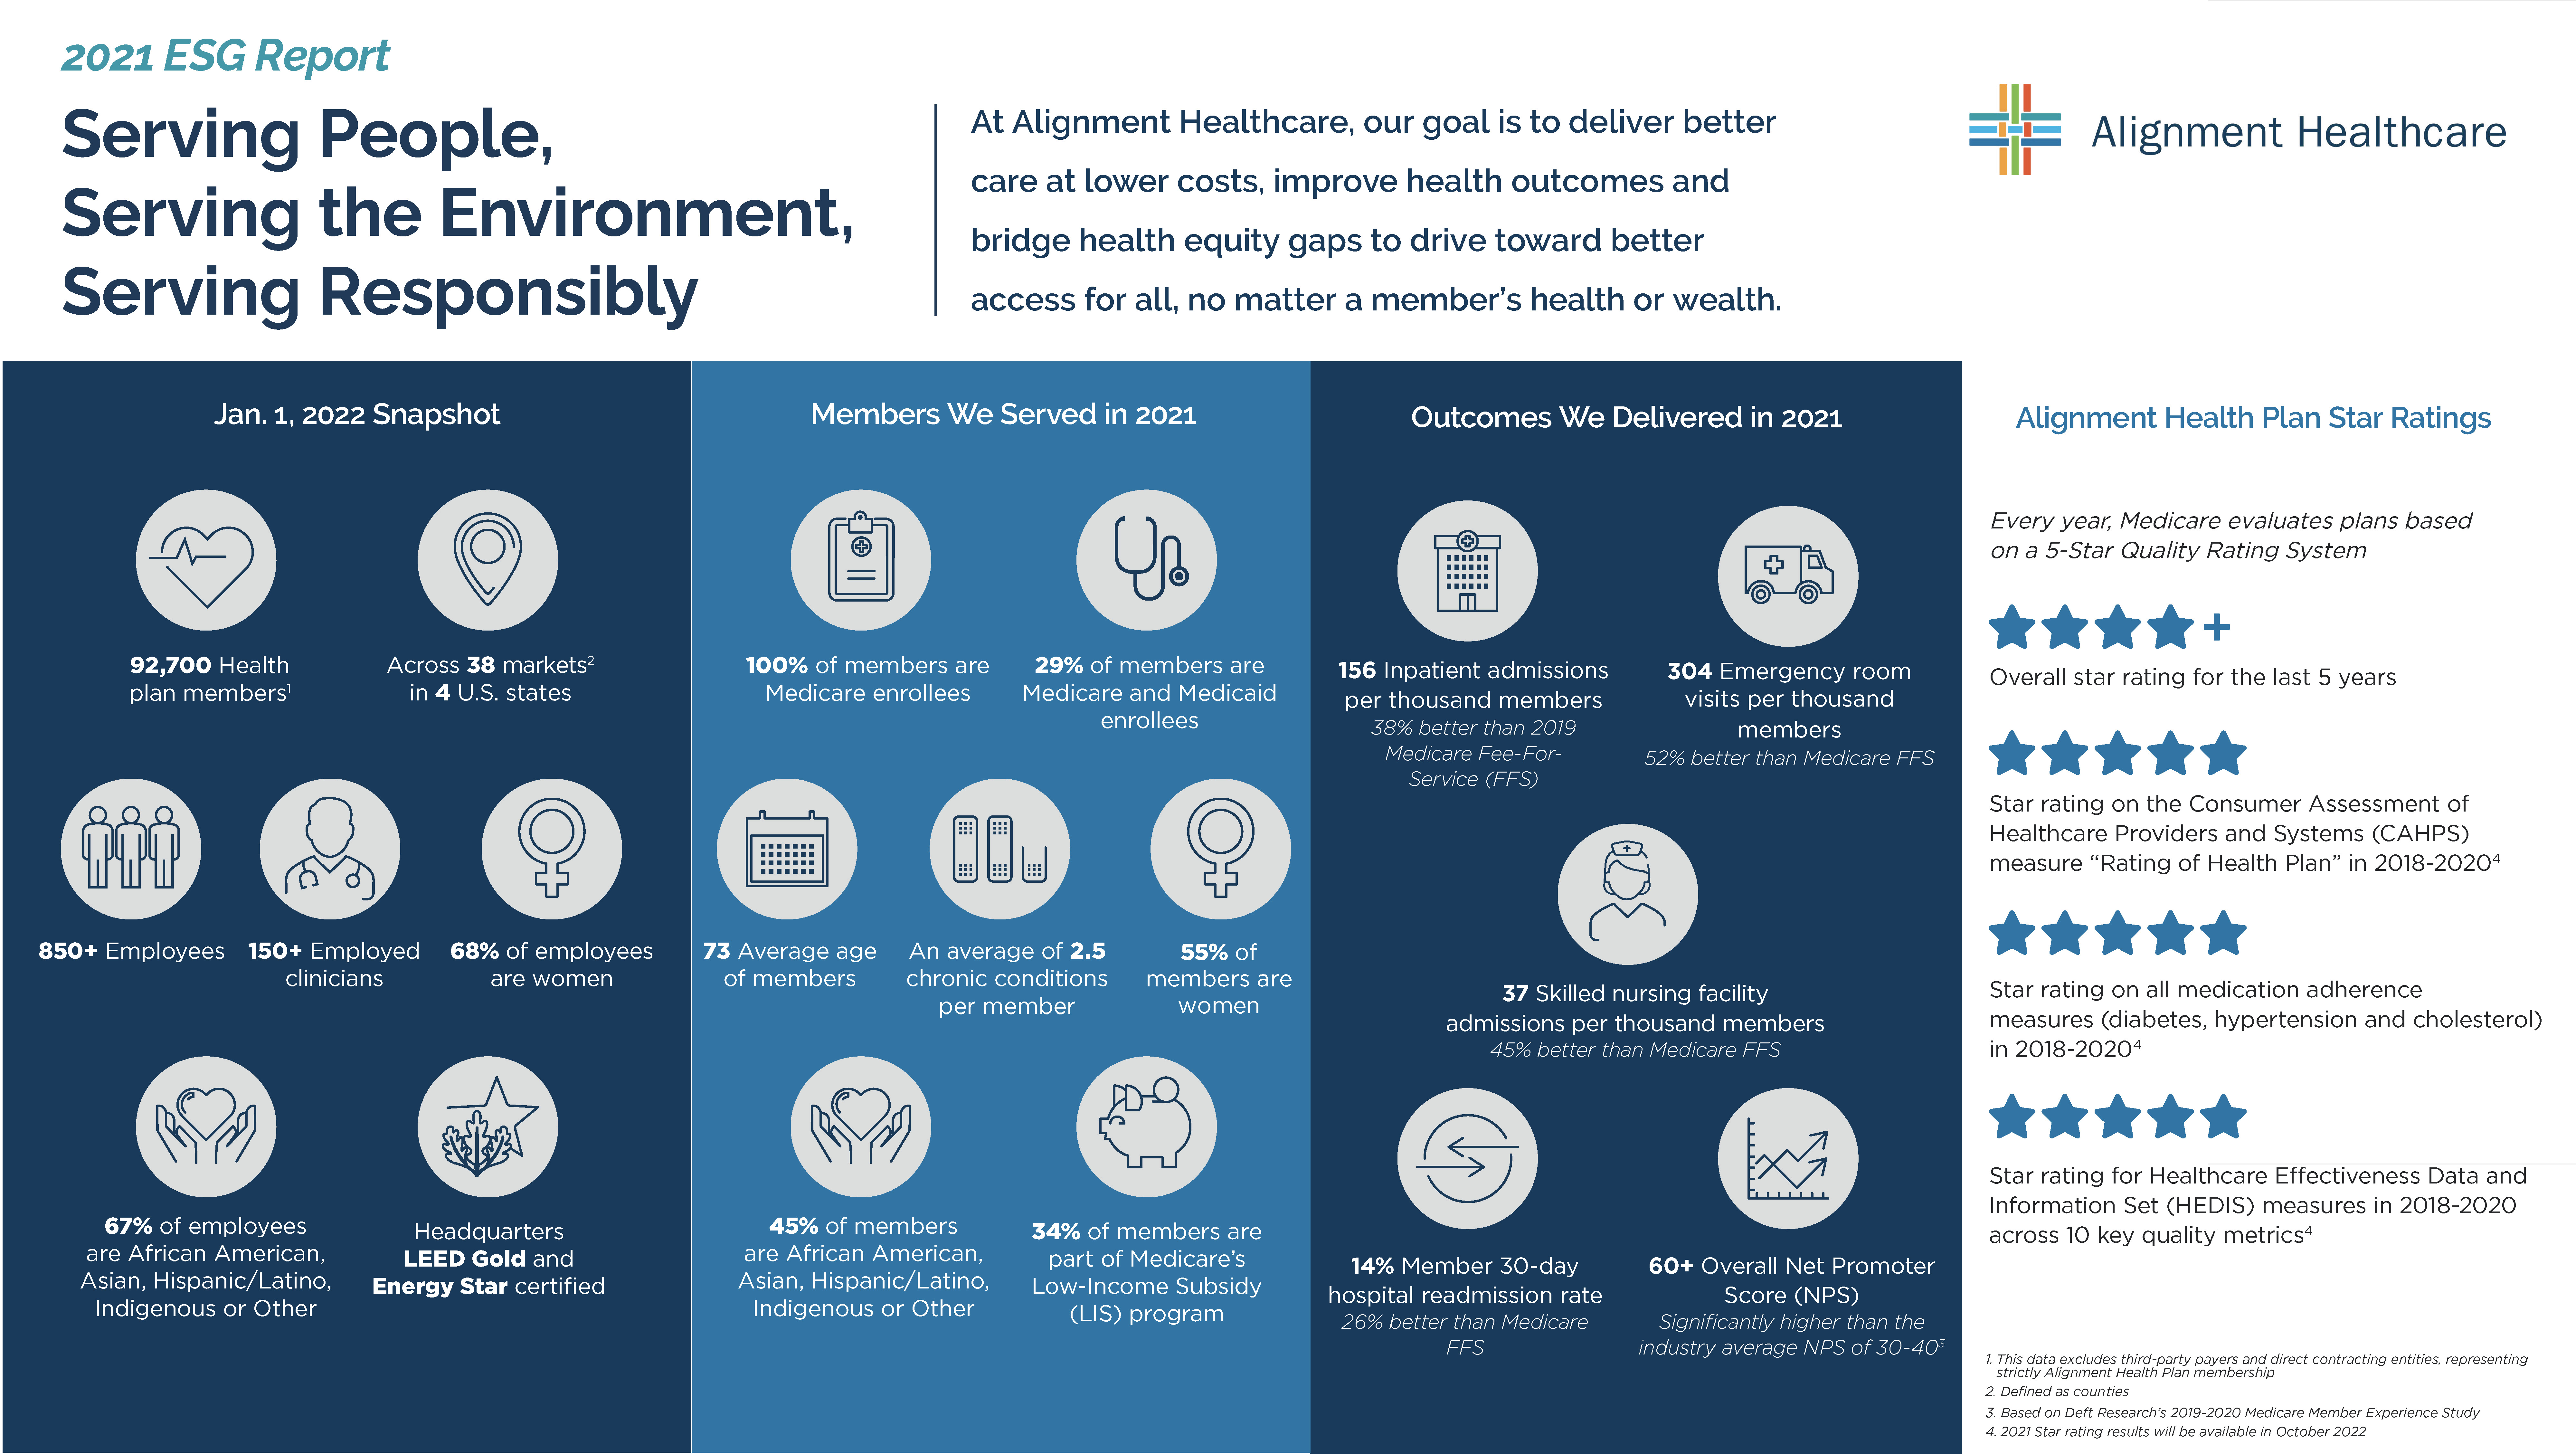 Alignment Healthcare publishes inaugural ESG report